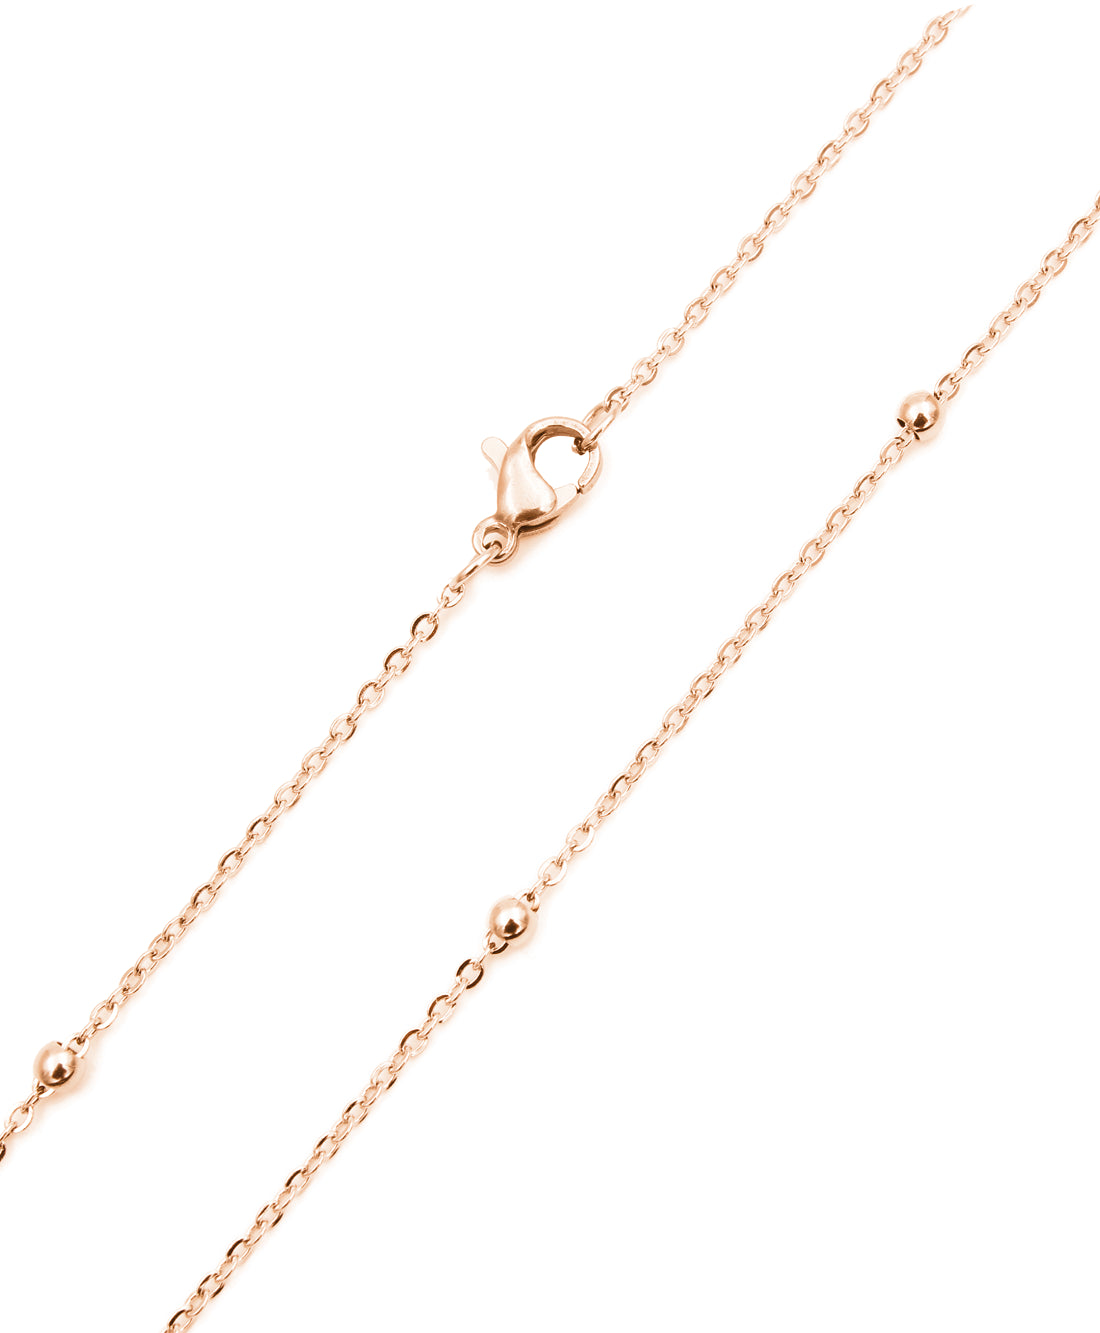 Long necklace / Necklace - Rose Gold - Pregnancy bola 110cm